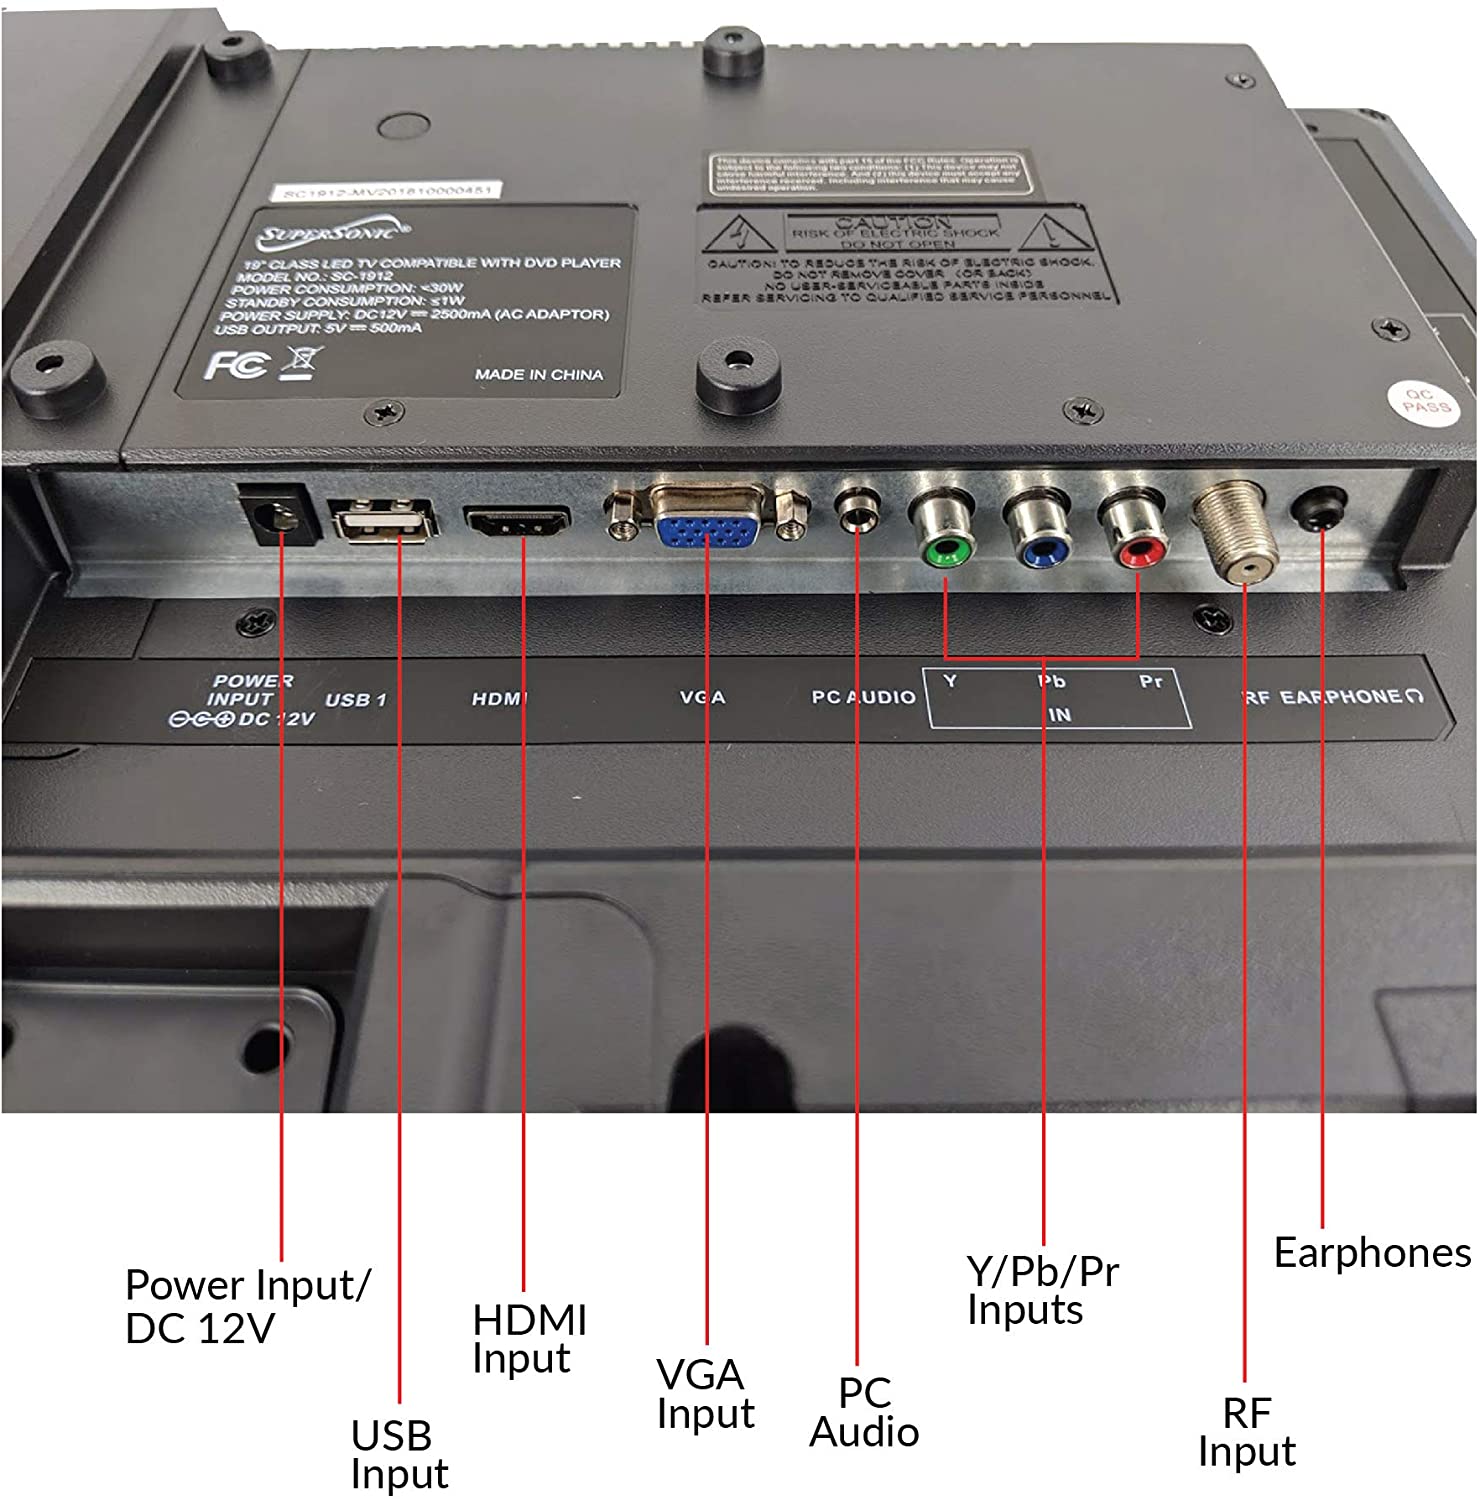 SuperSonic 24” SC-2412 LED HDTV ports